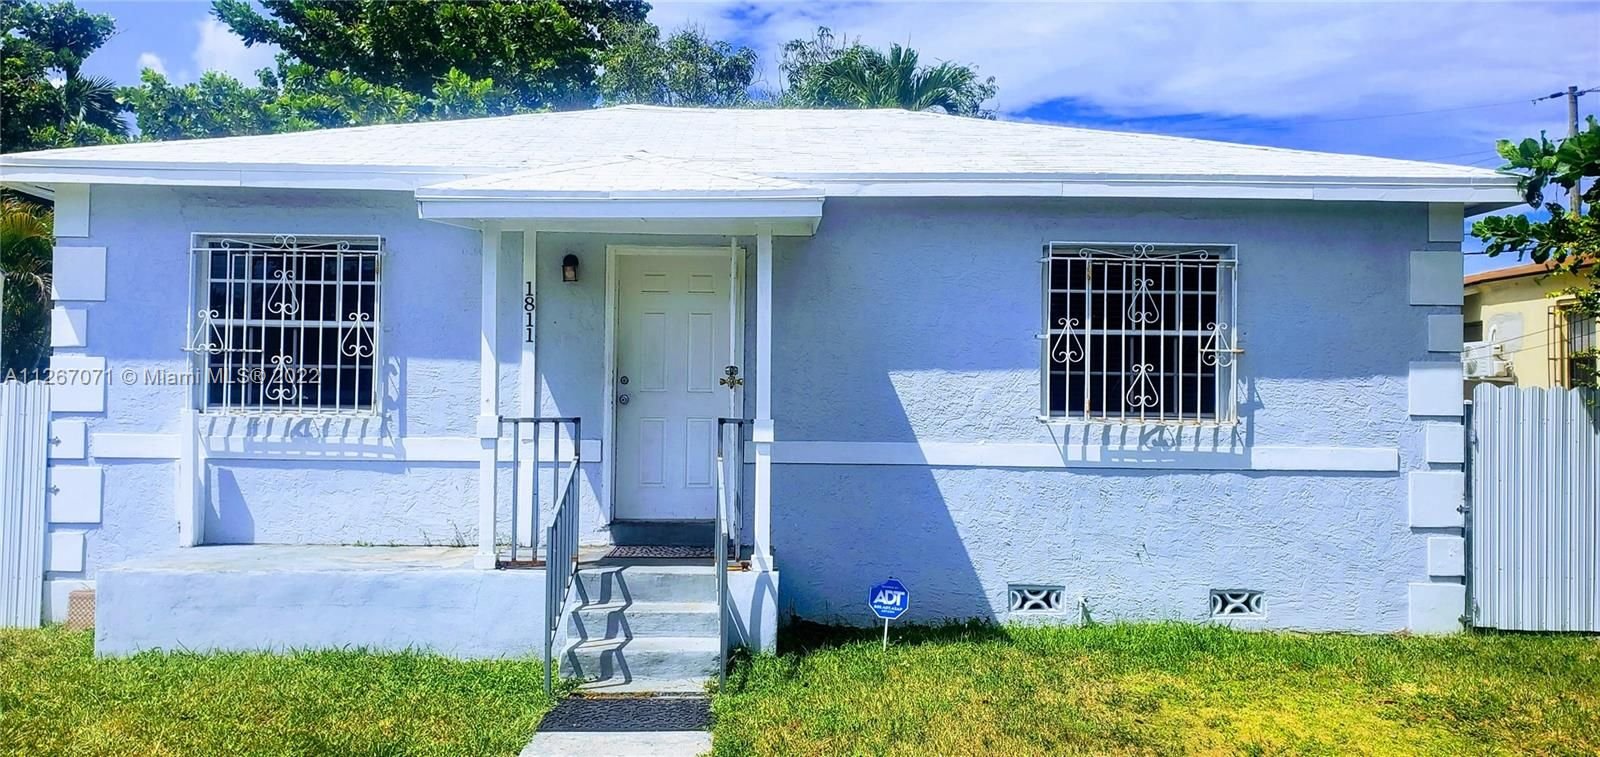 Real estate property located at 1811 48th St, Miami-Dade County, Miami, FL